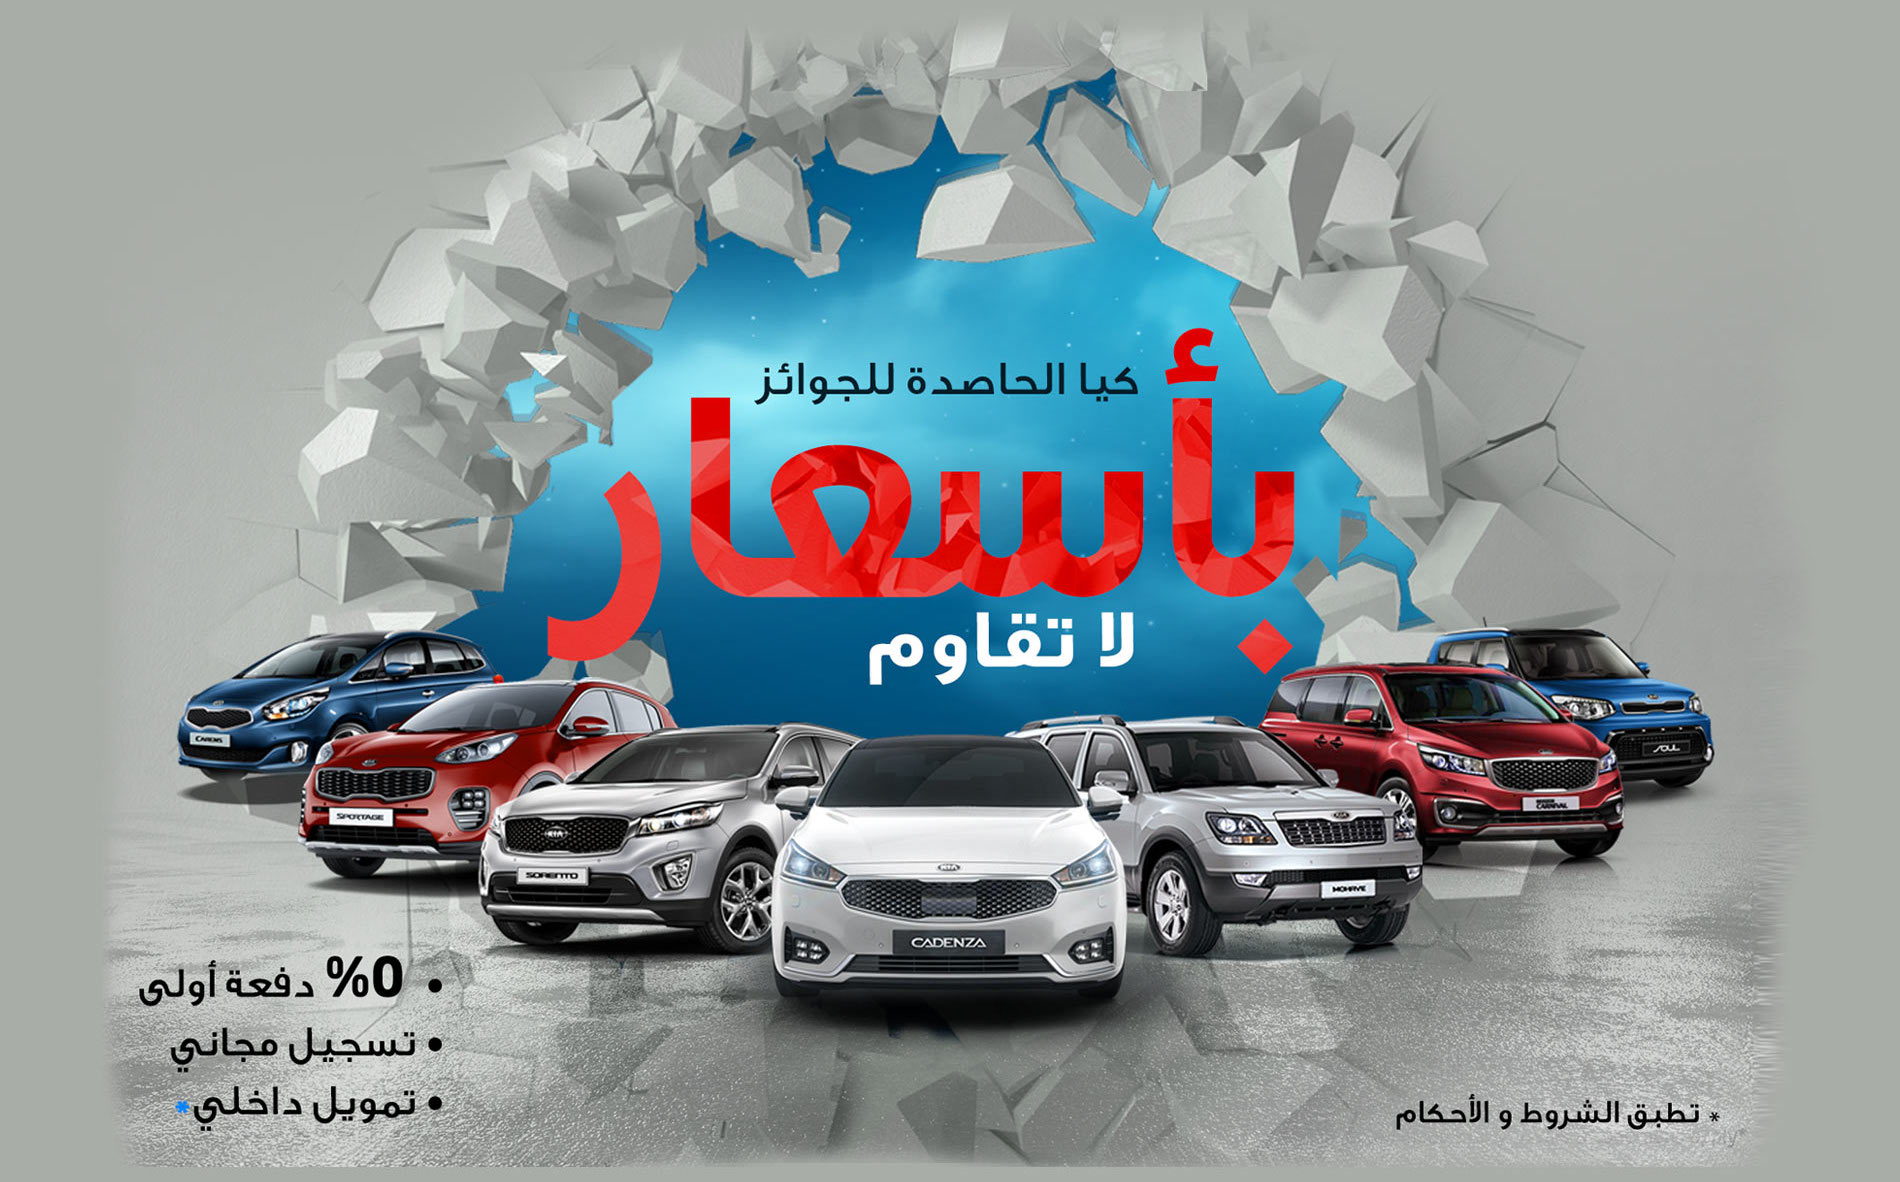 KIA, the strong rival in the auto market in Qatar